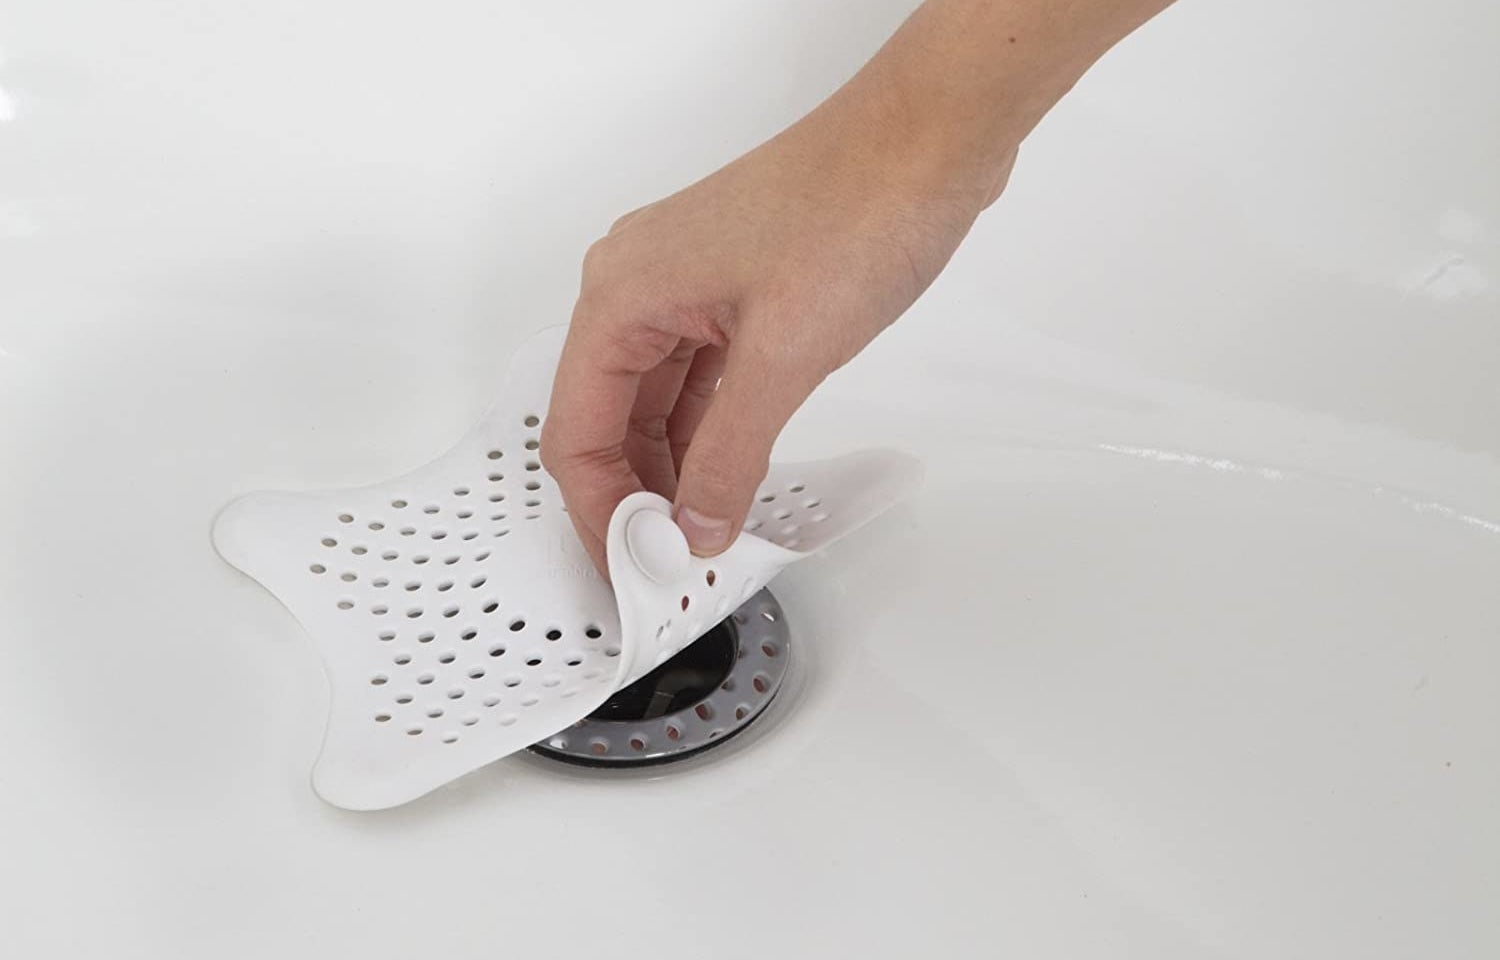 A star-shaped silicone pad covering a bathtub drain